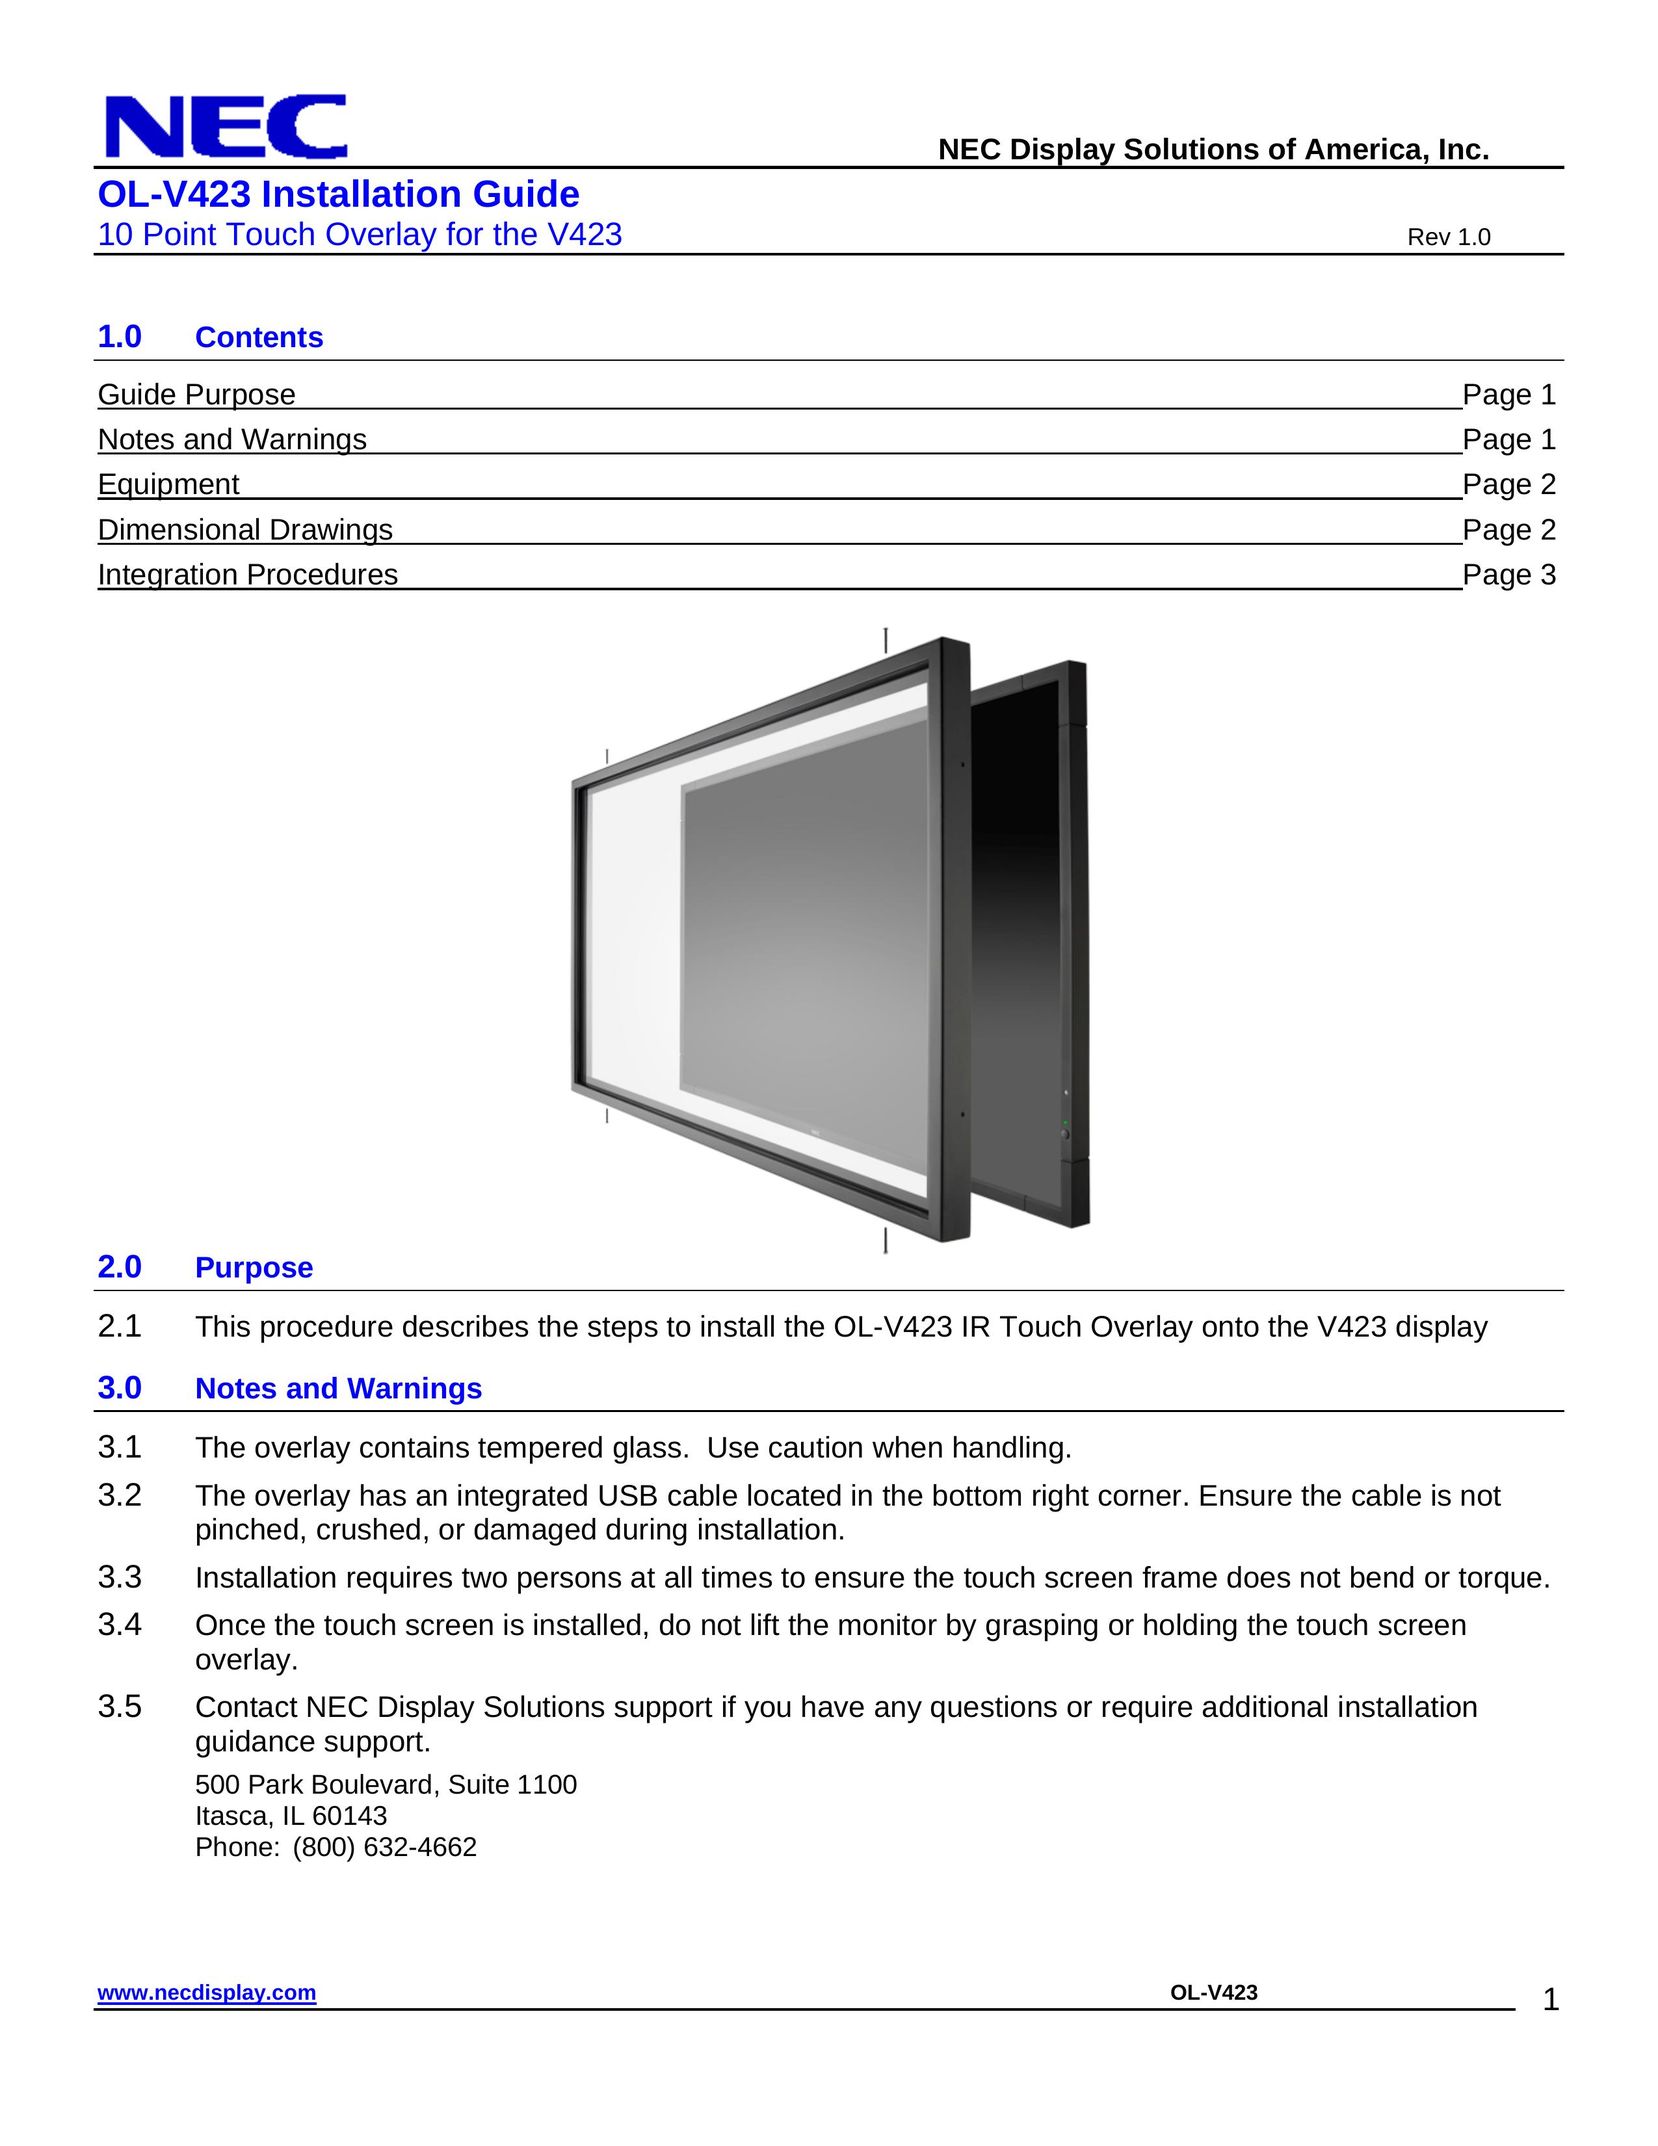 NEC OL-V423 Car Video System User Manual